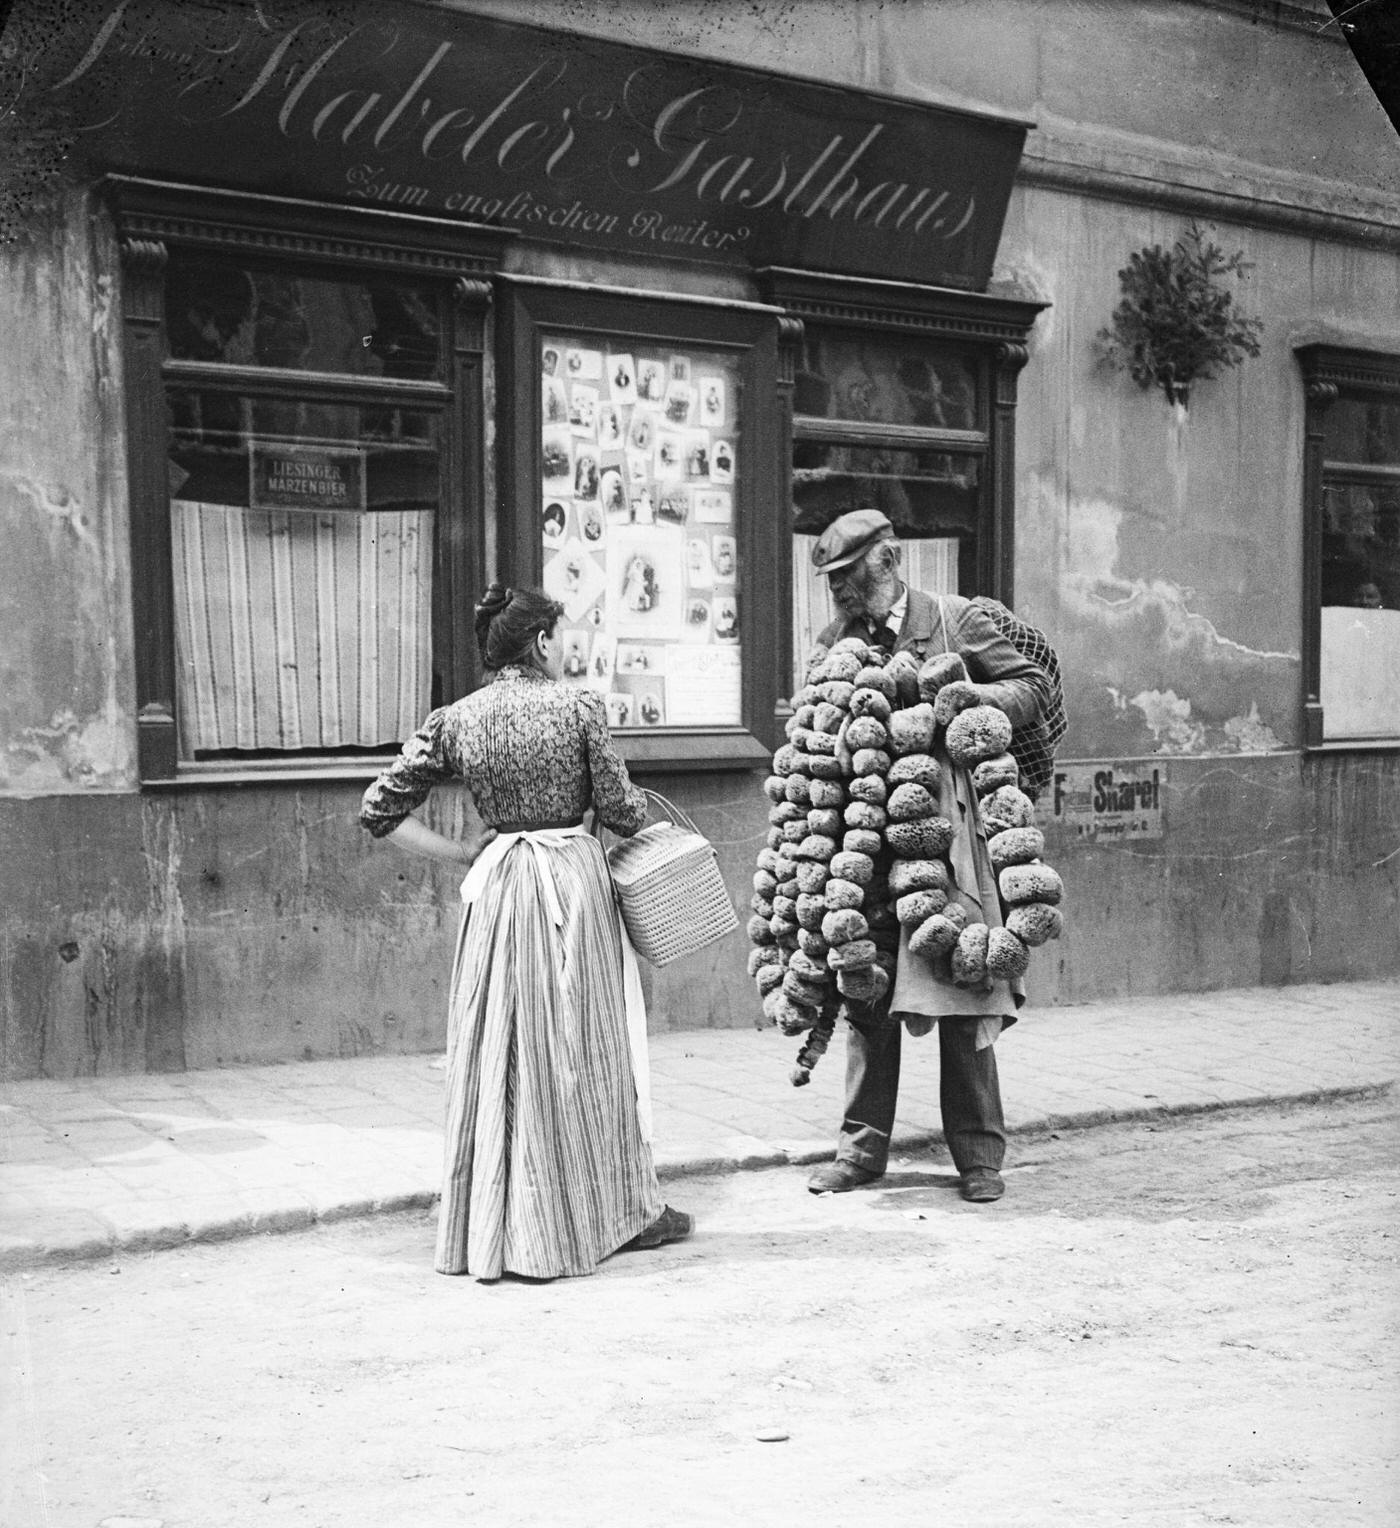 A sponge-dealer, Vienna, 1900s